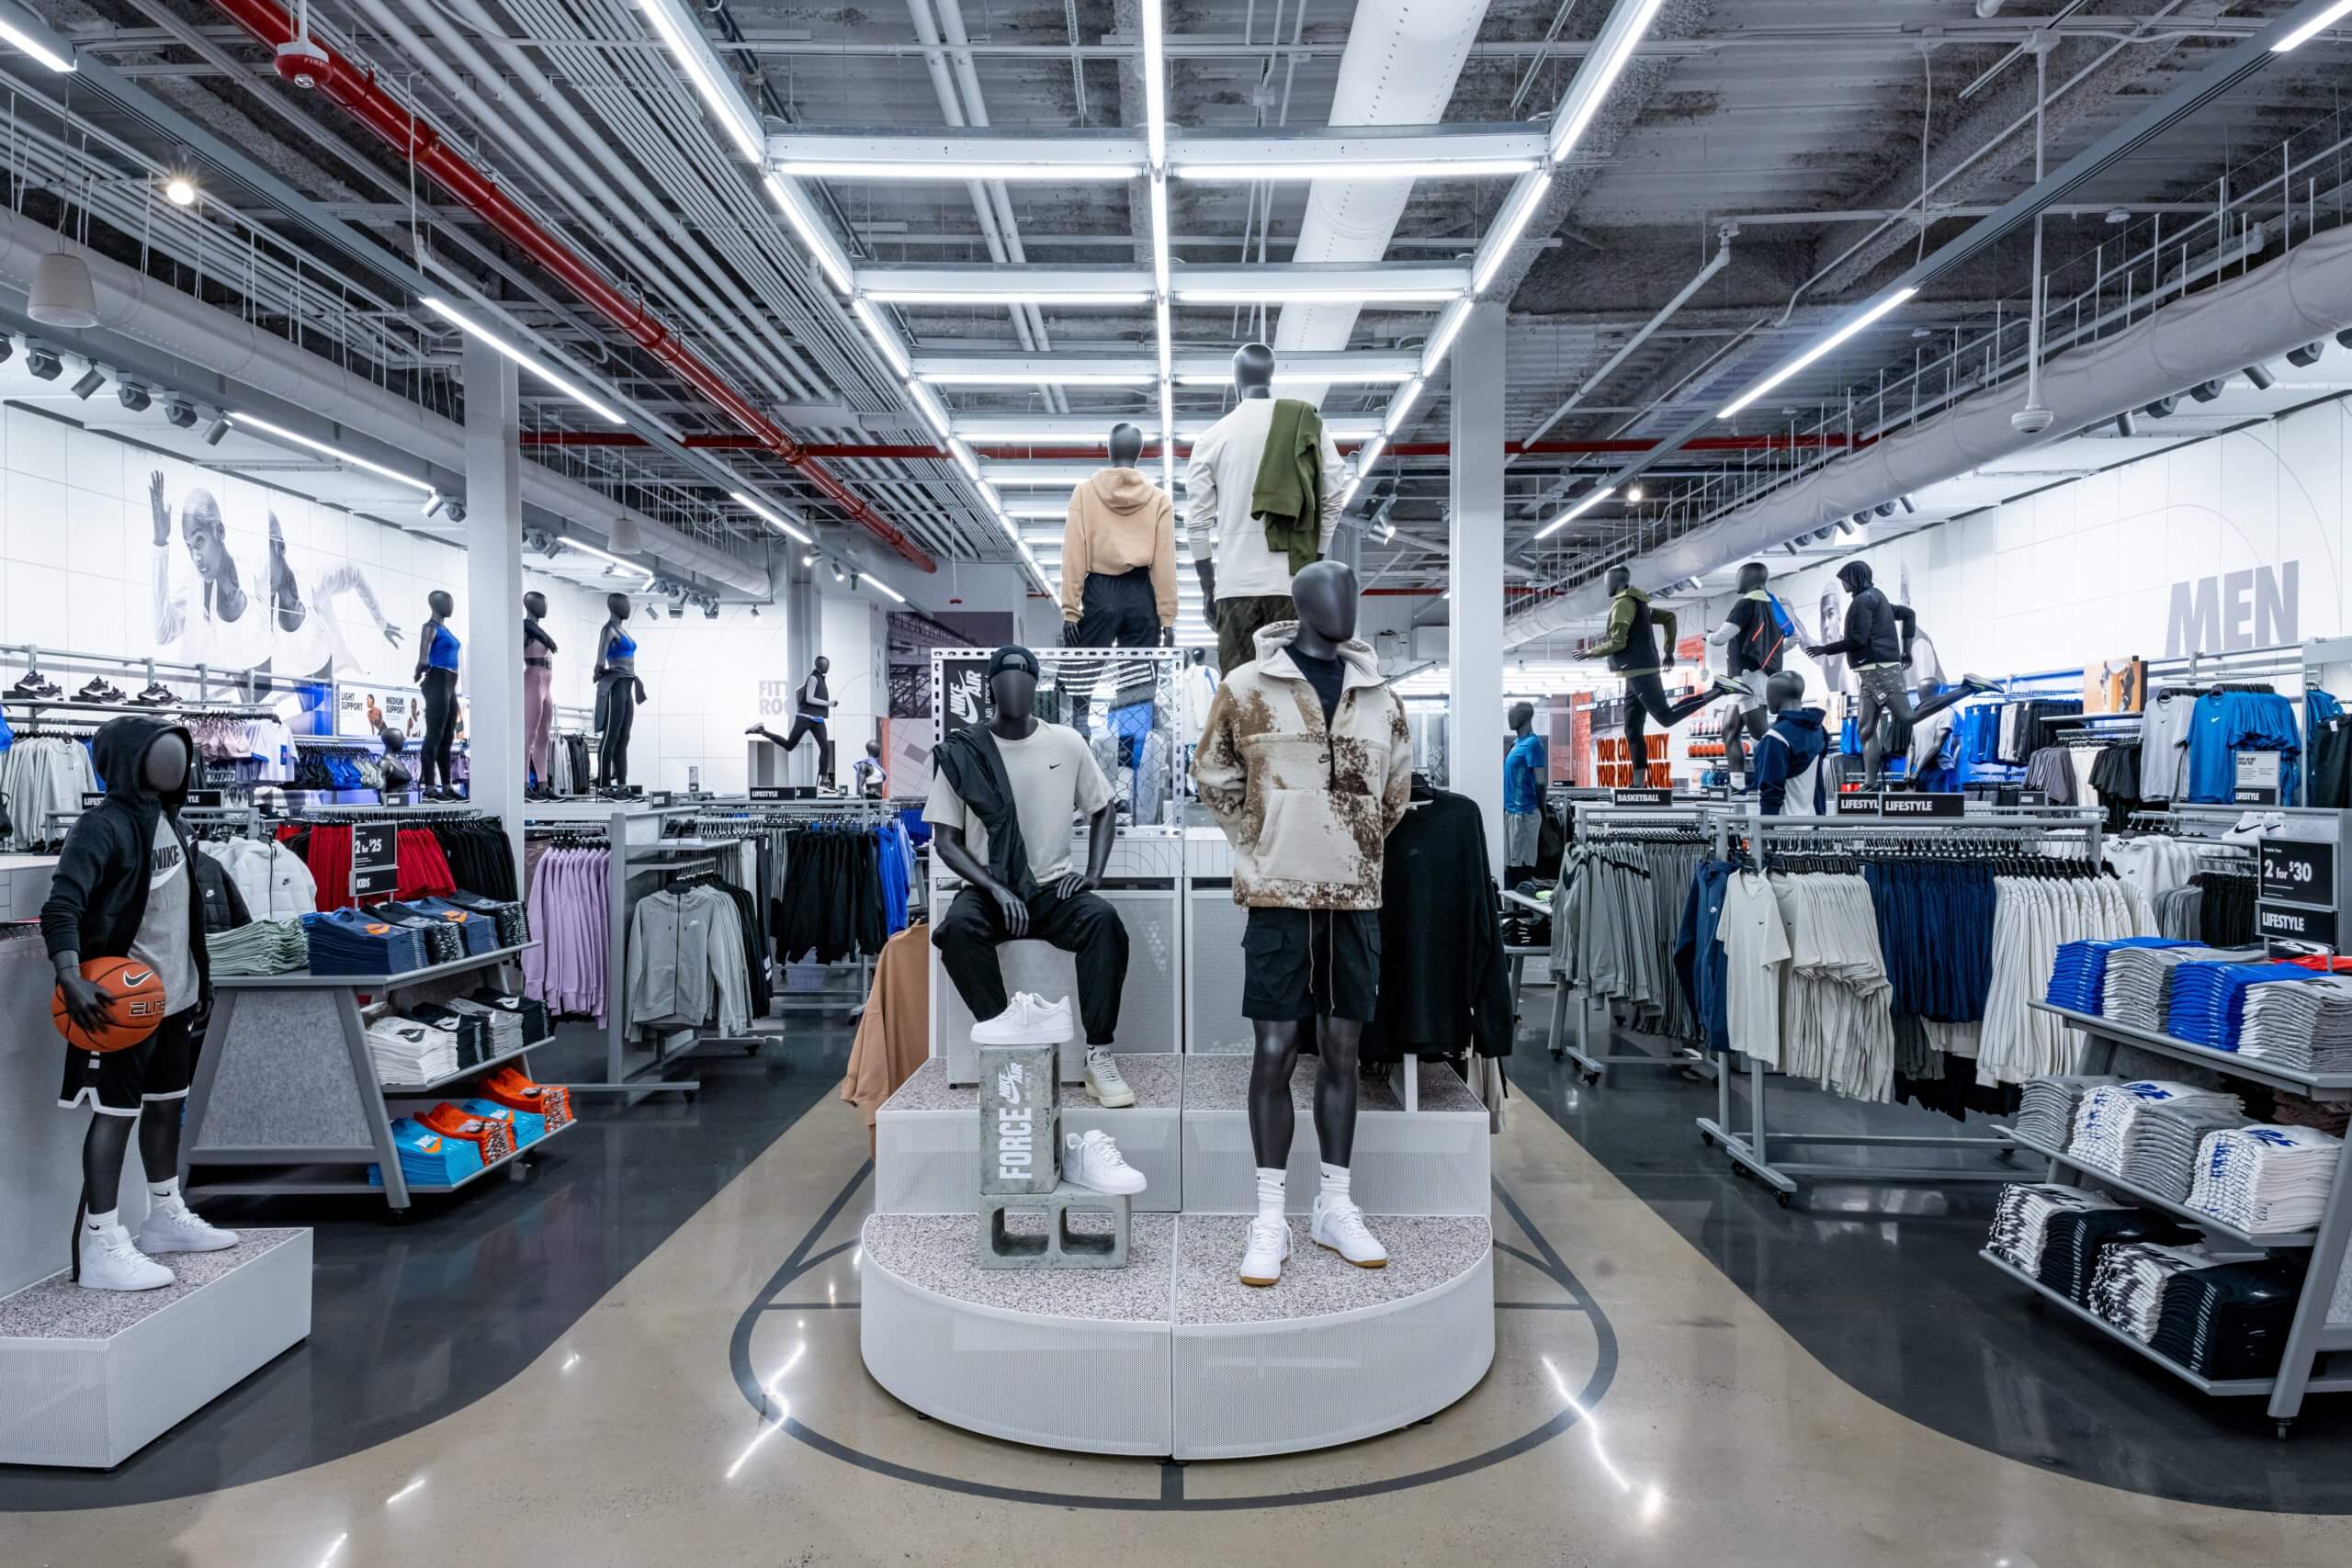 venster steen Snel Nike opens new retail store in Harlem | amNewYork